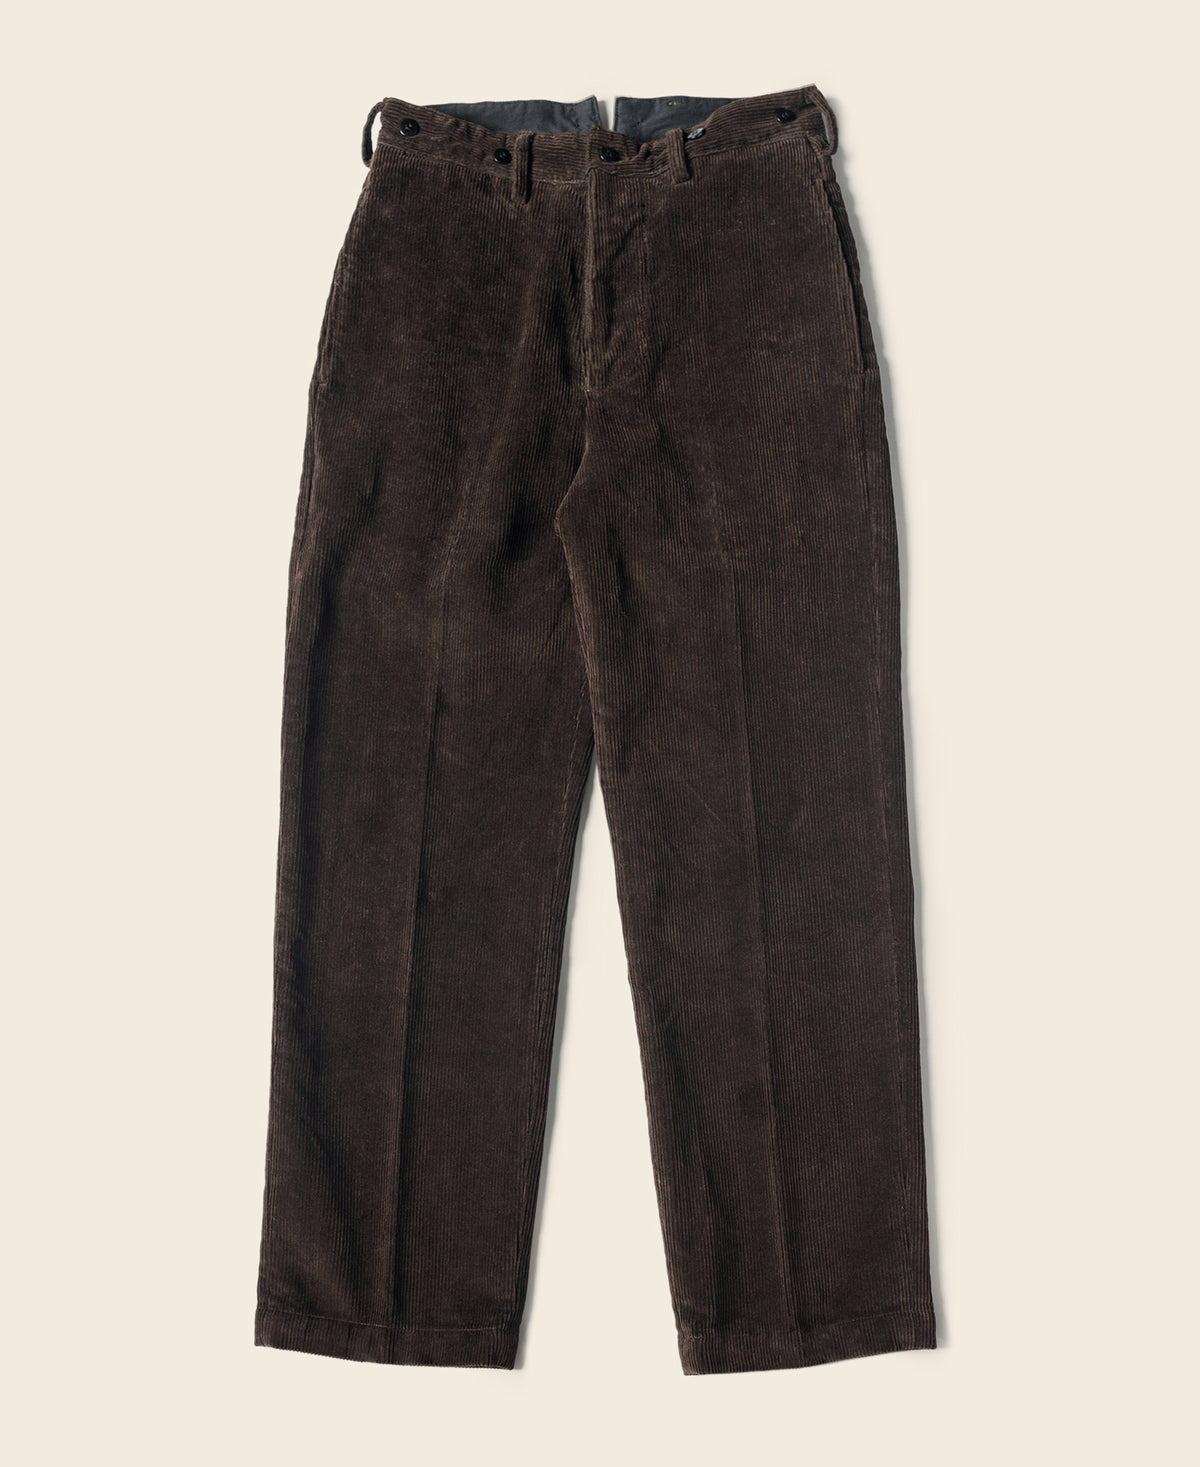 1920s Heavy-Duty Corduroy Work Pants